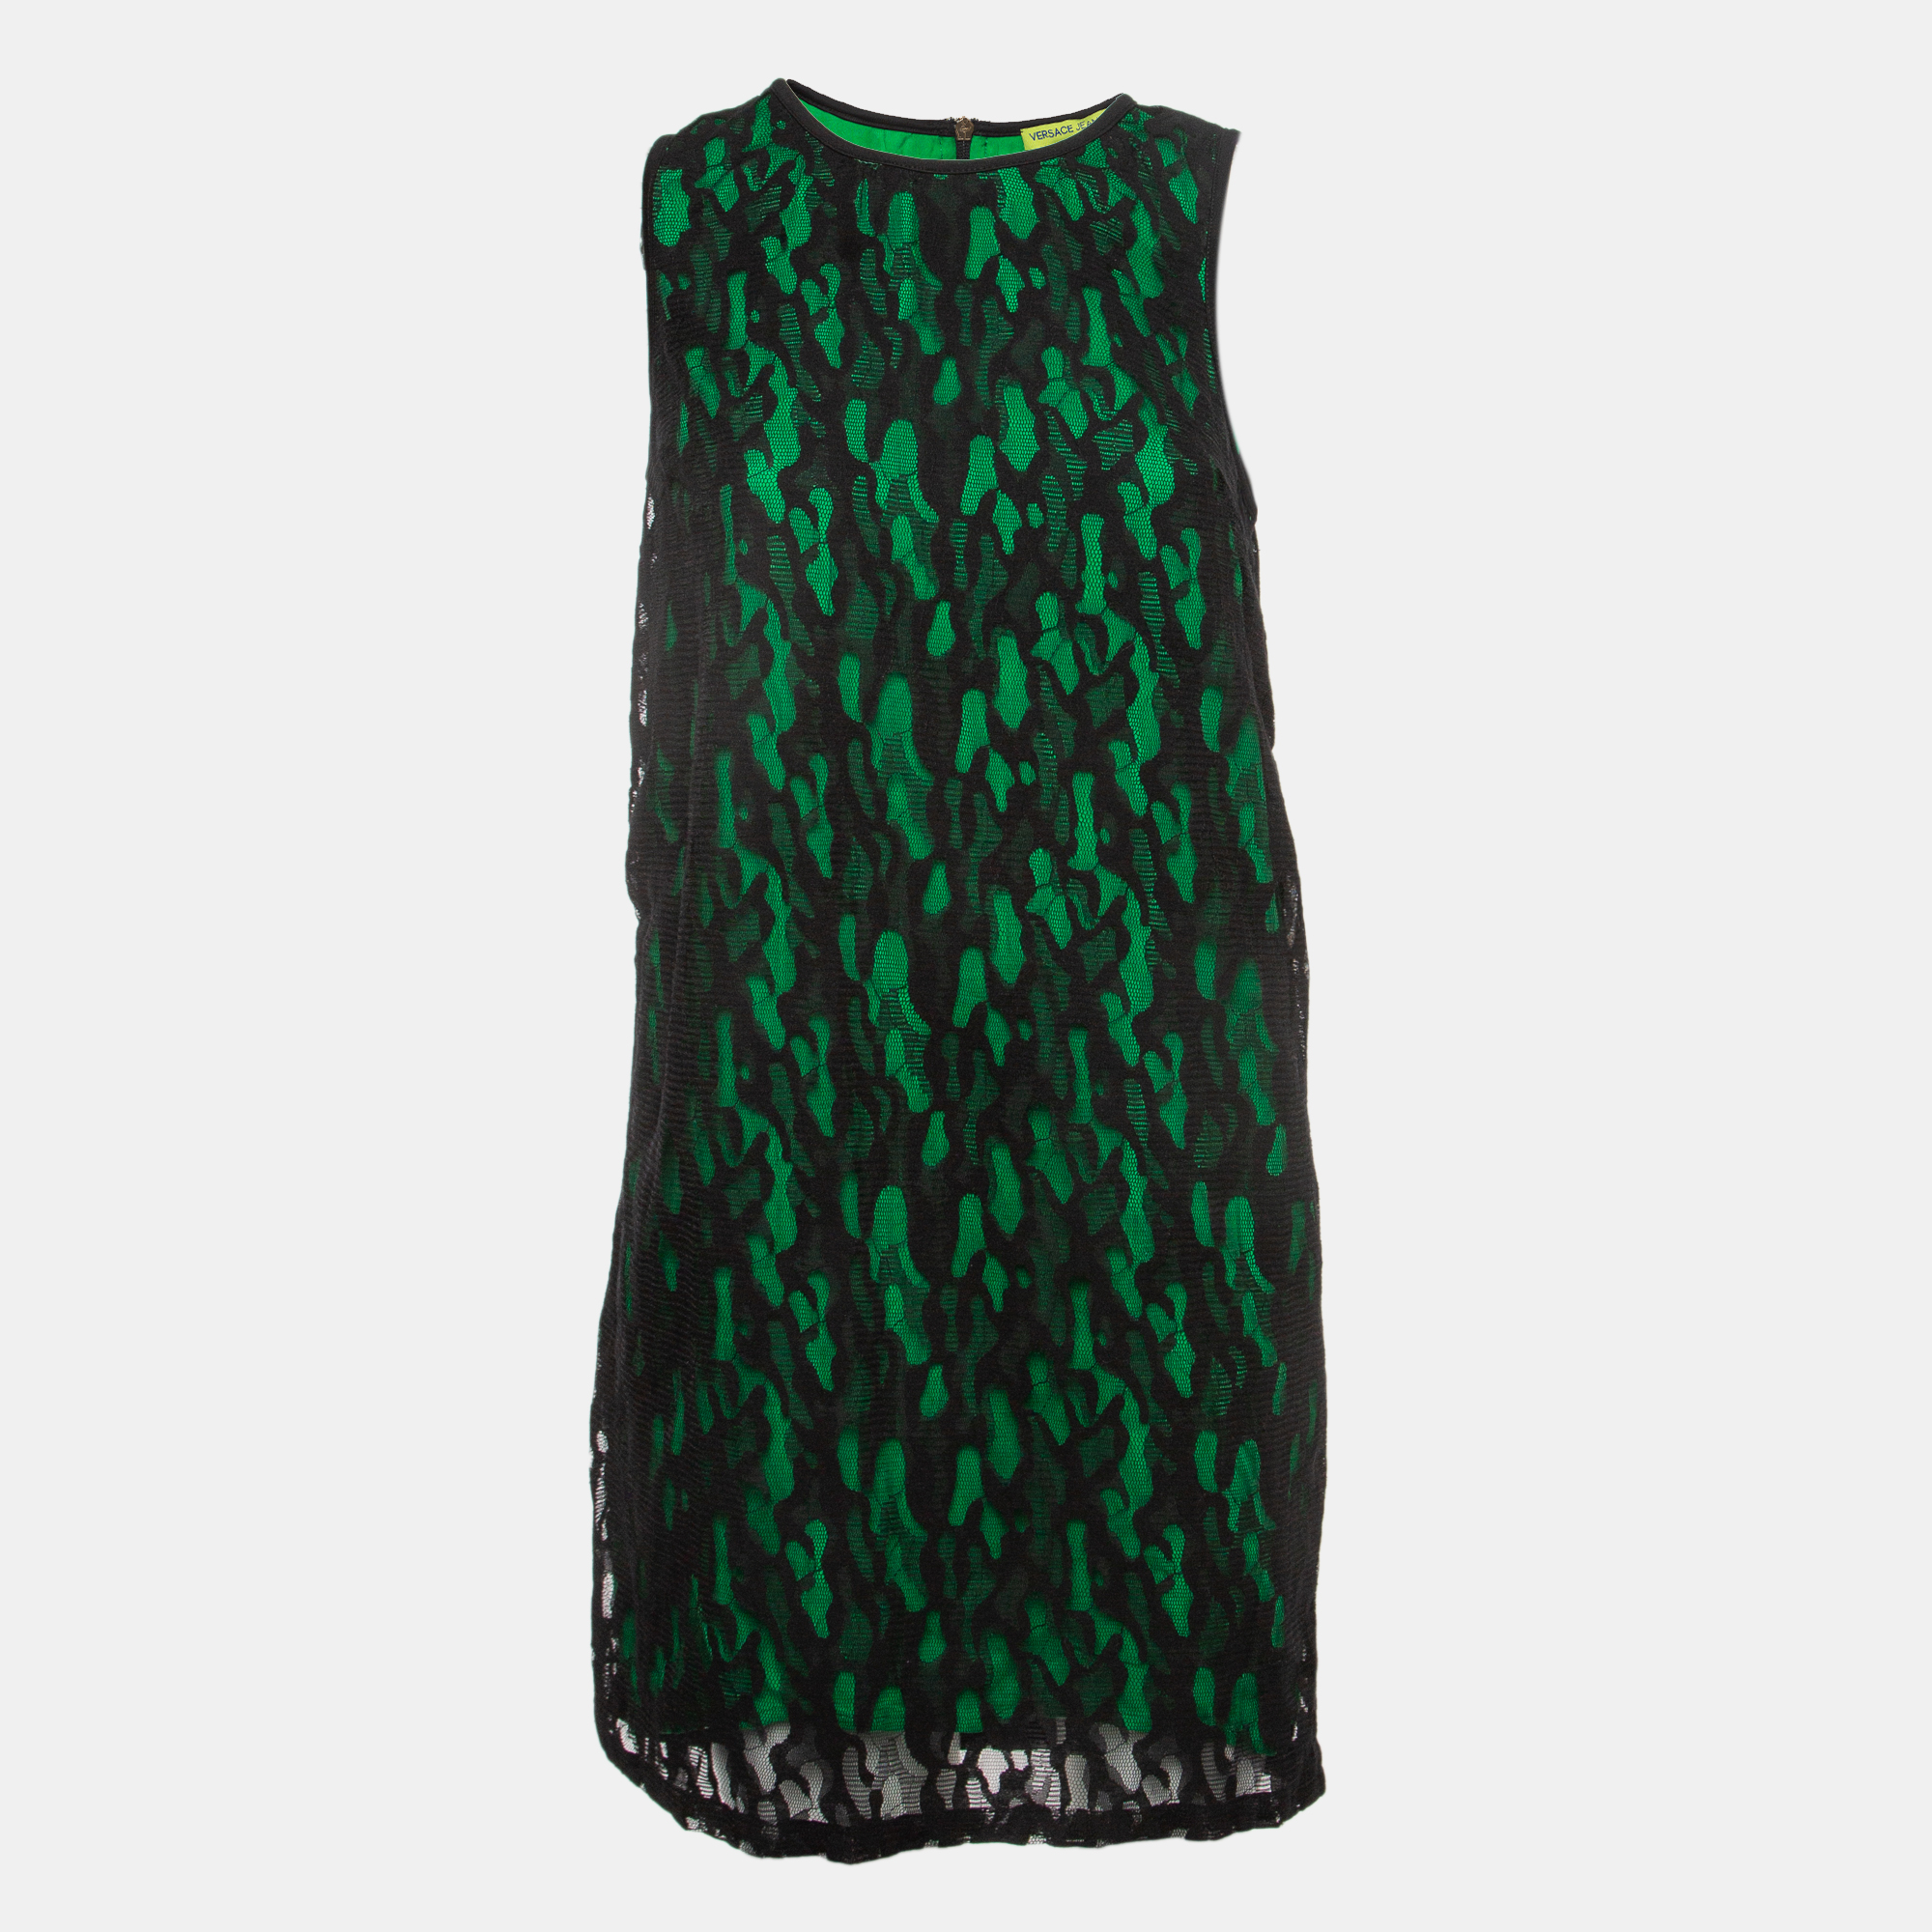 Versace jeans black/green lace overlay sleeveless short dress m